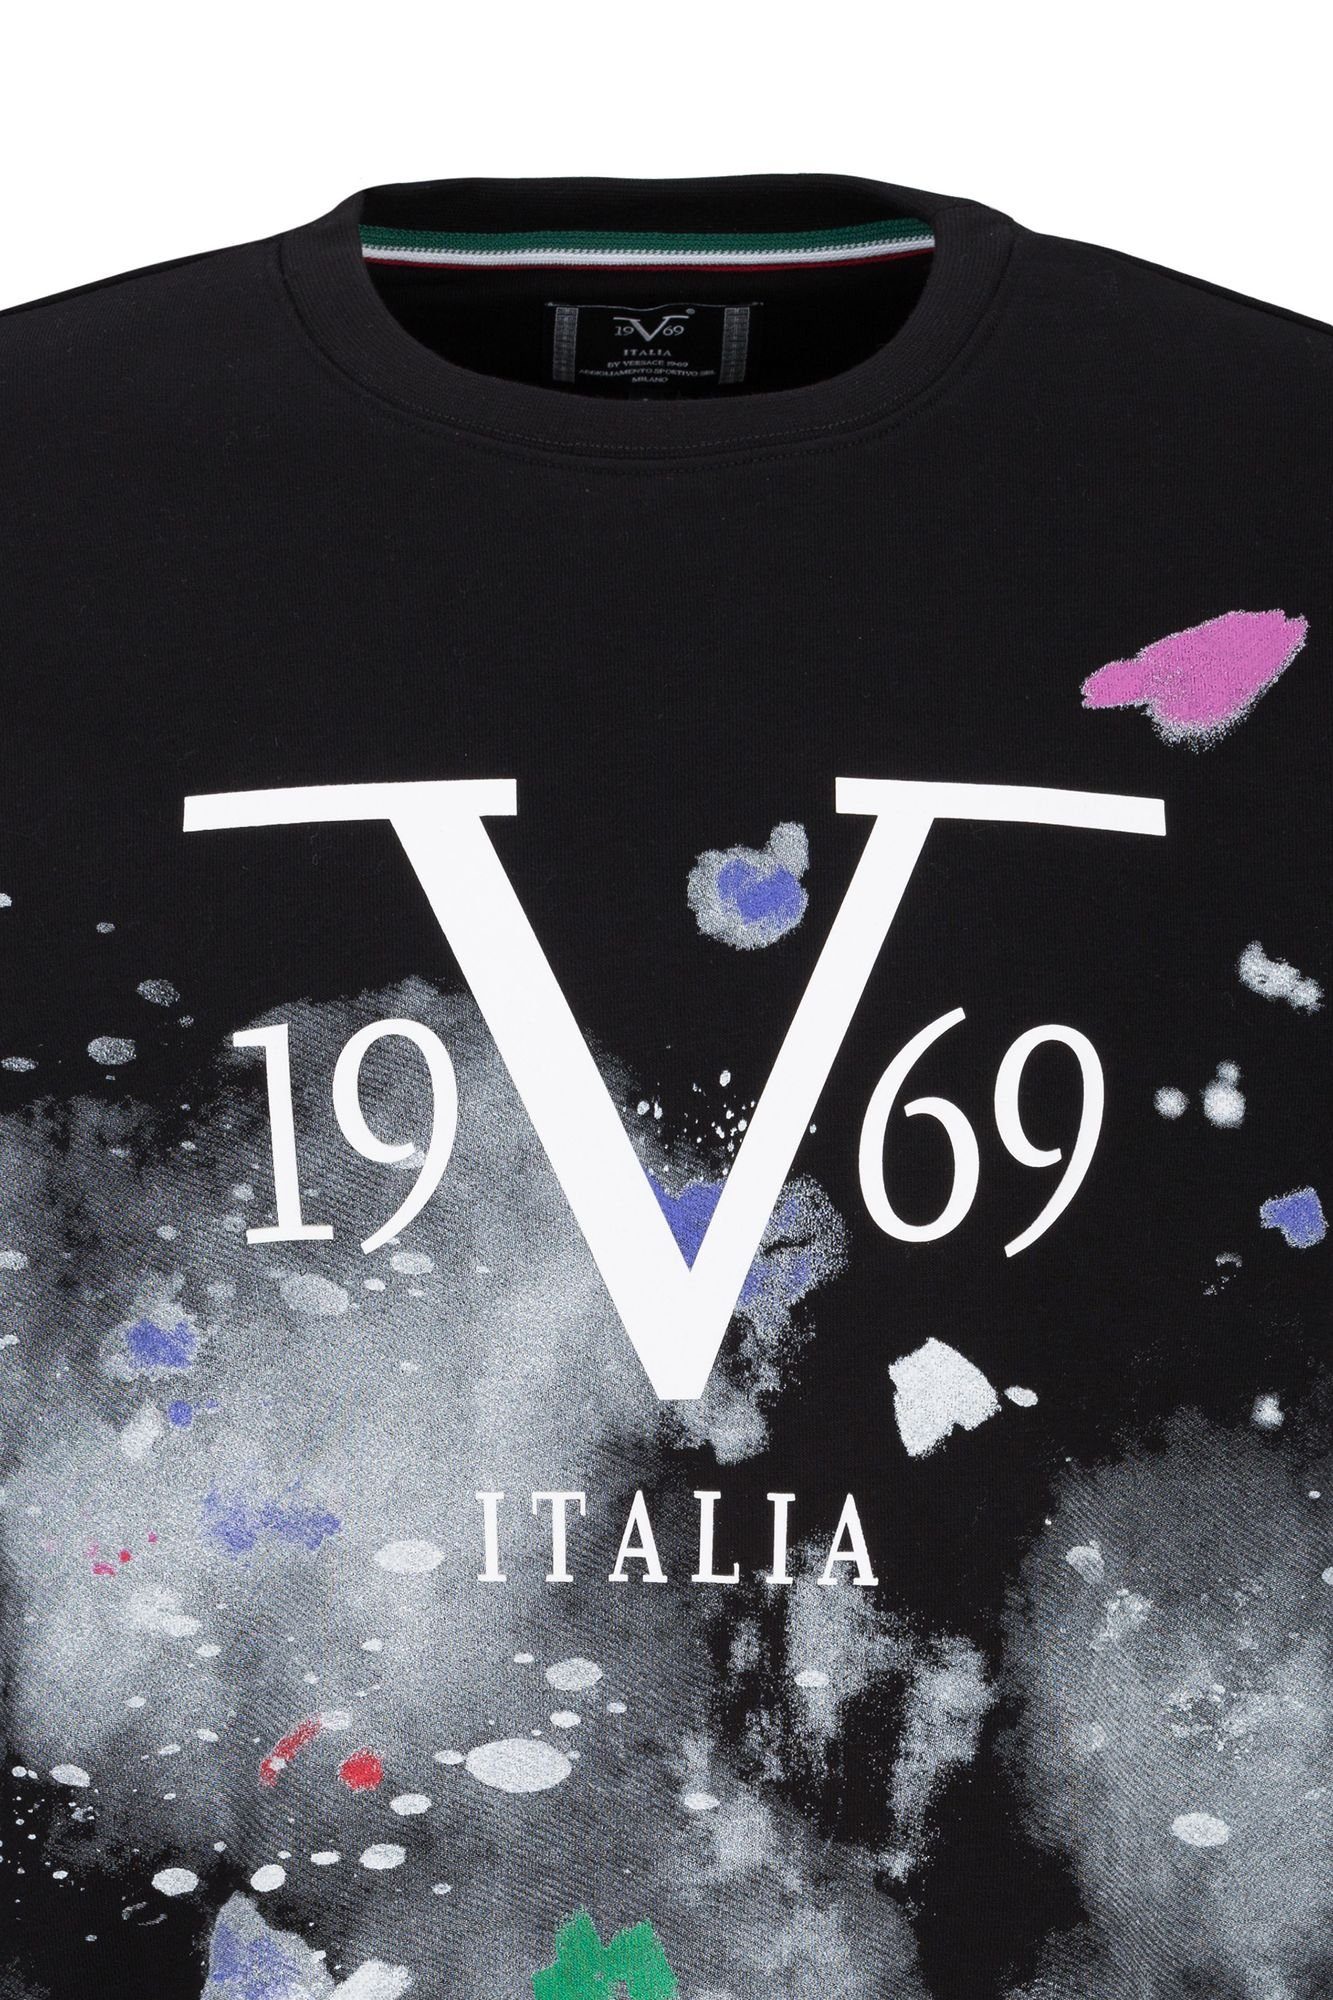 19V69 Italia by Versace Sweatshirt SRL Luan by Sportivo - Versace